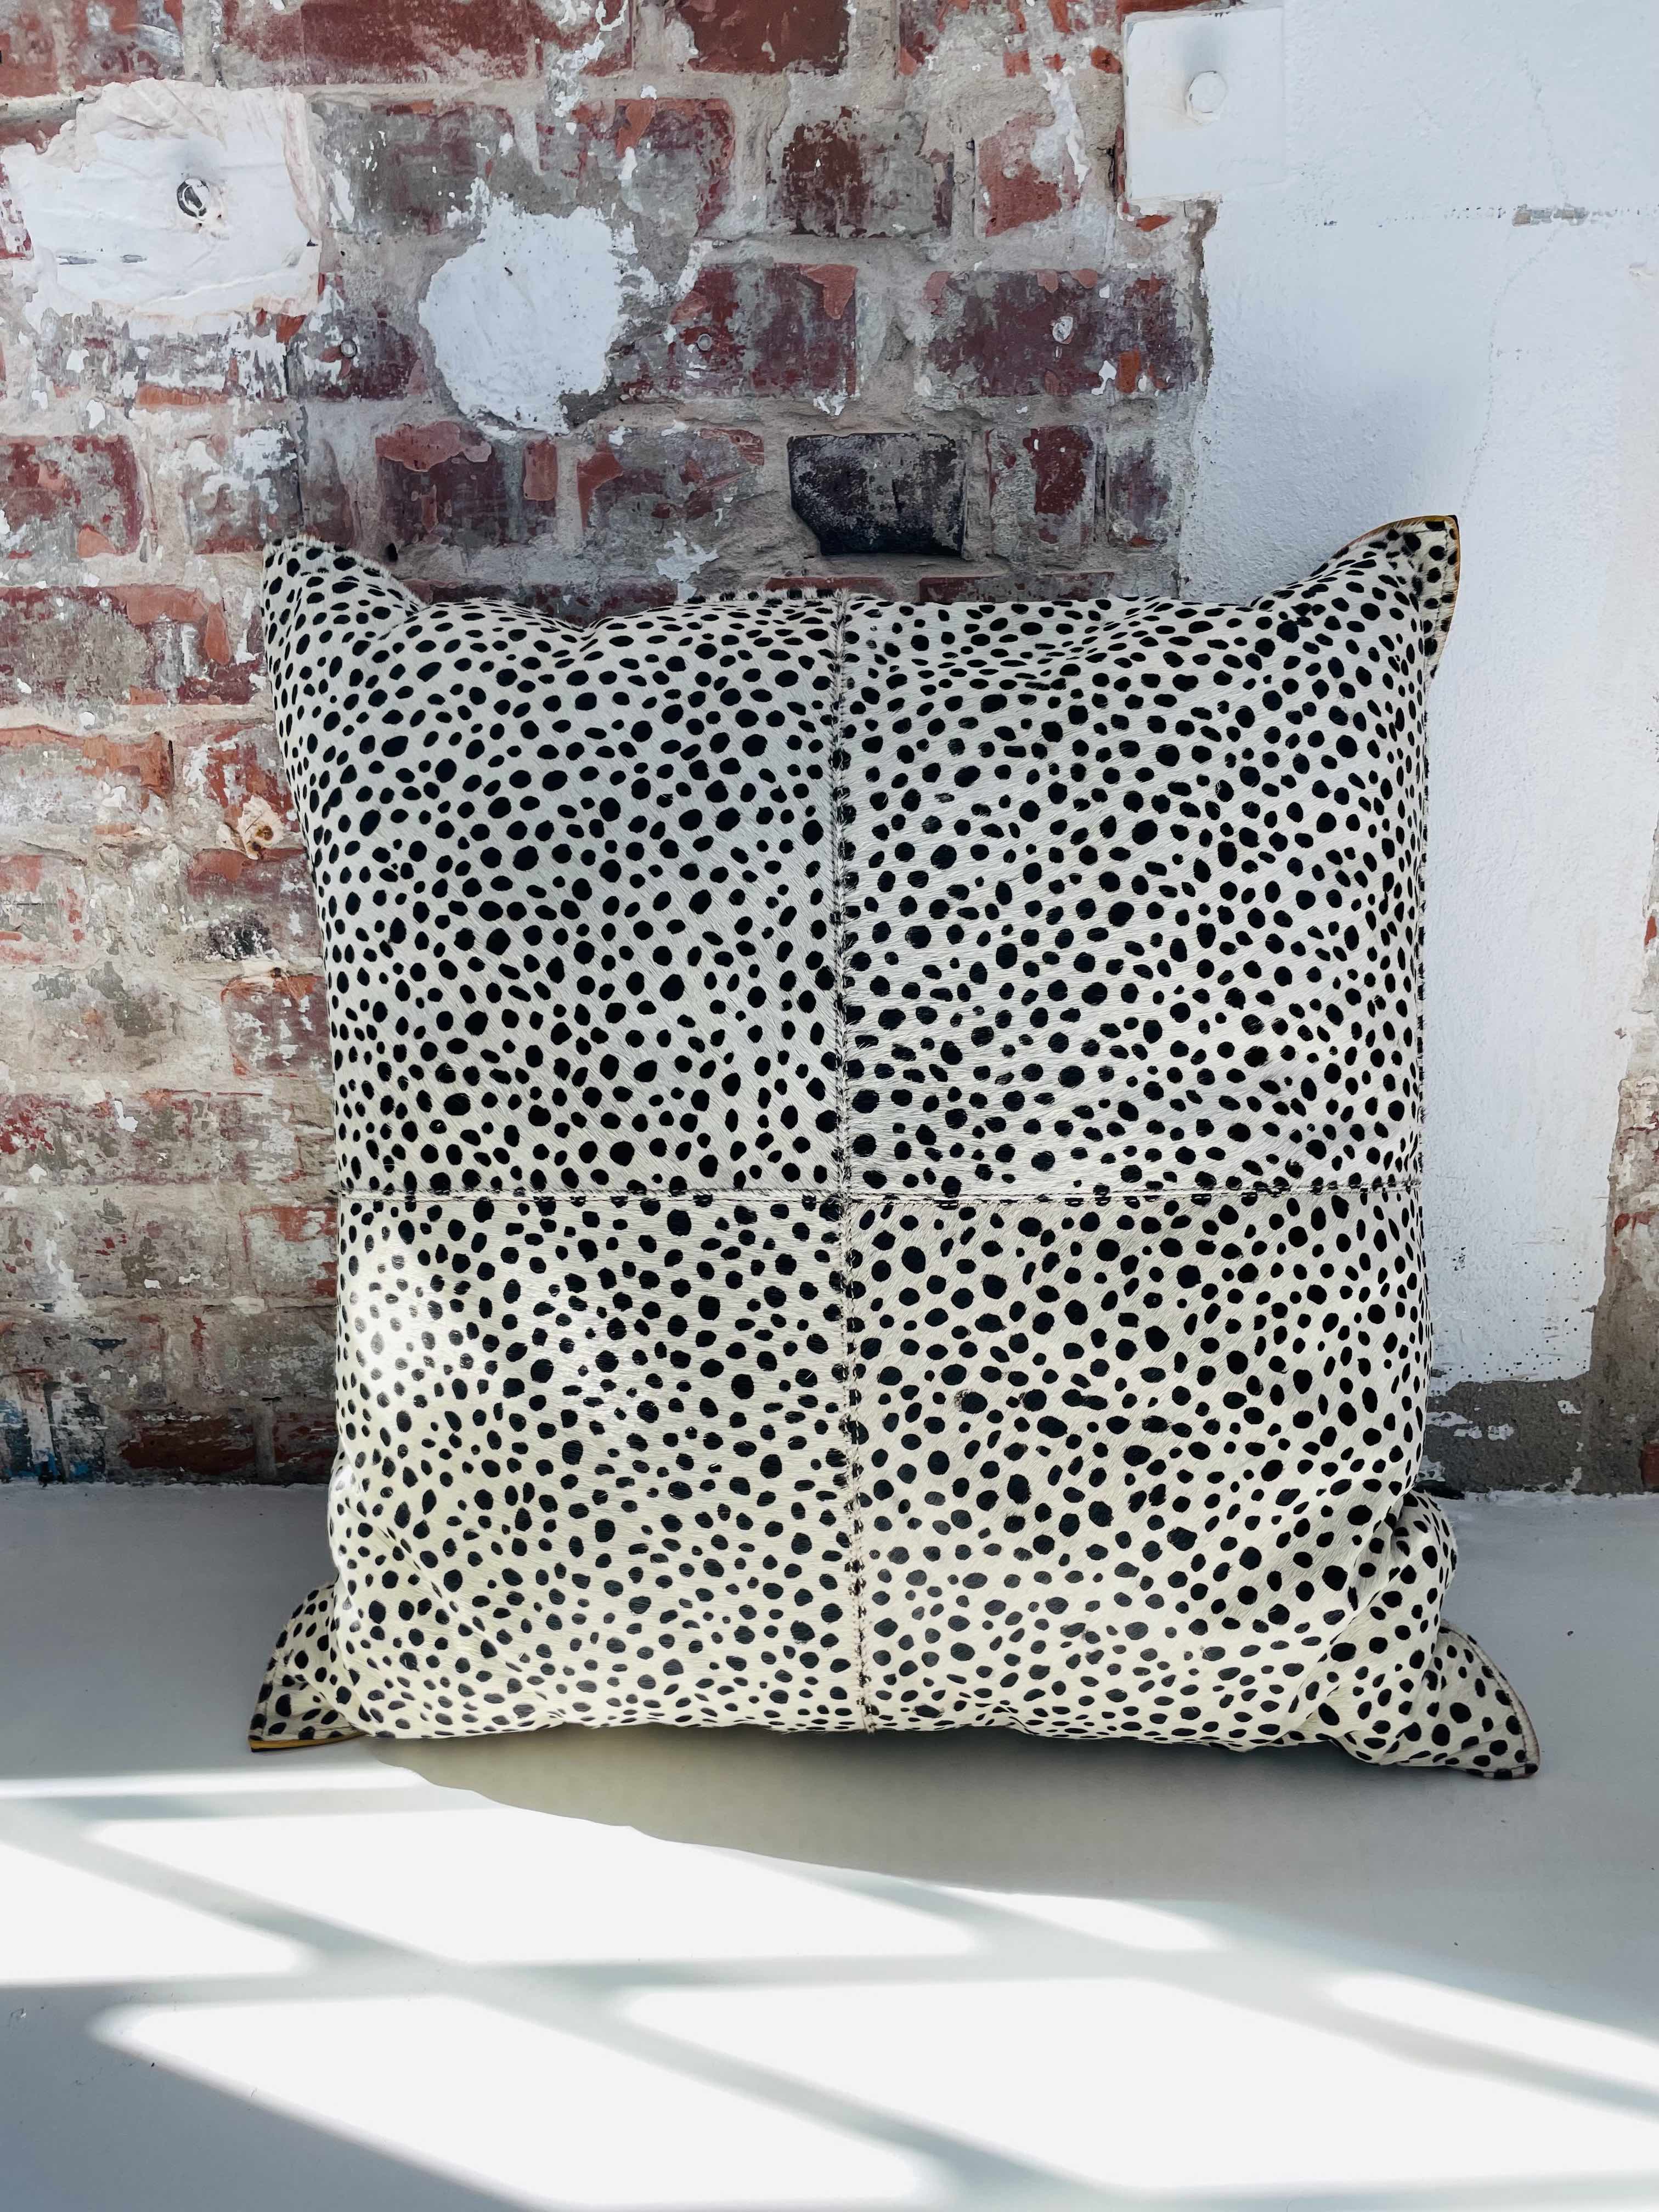 Leopard floor cushion